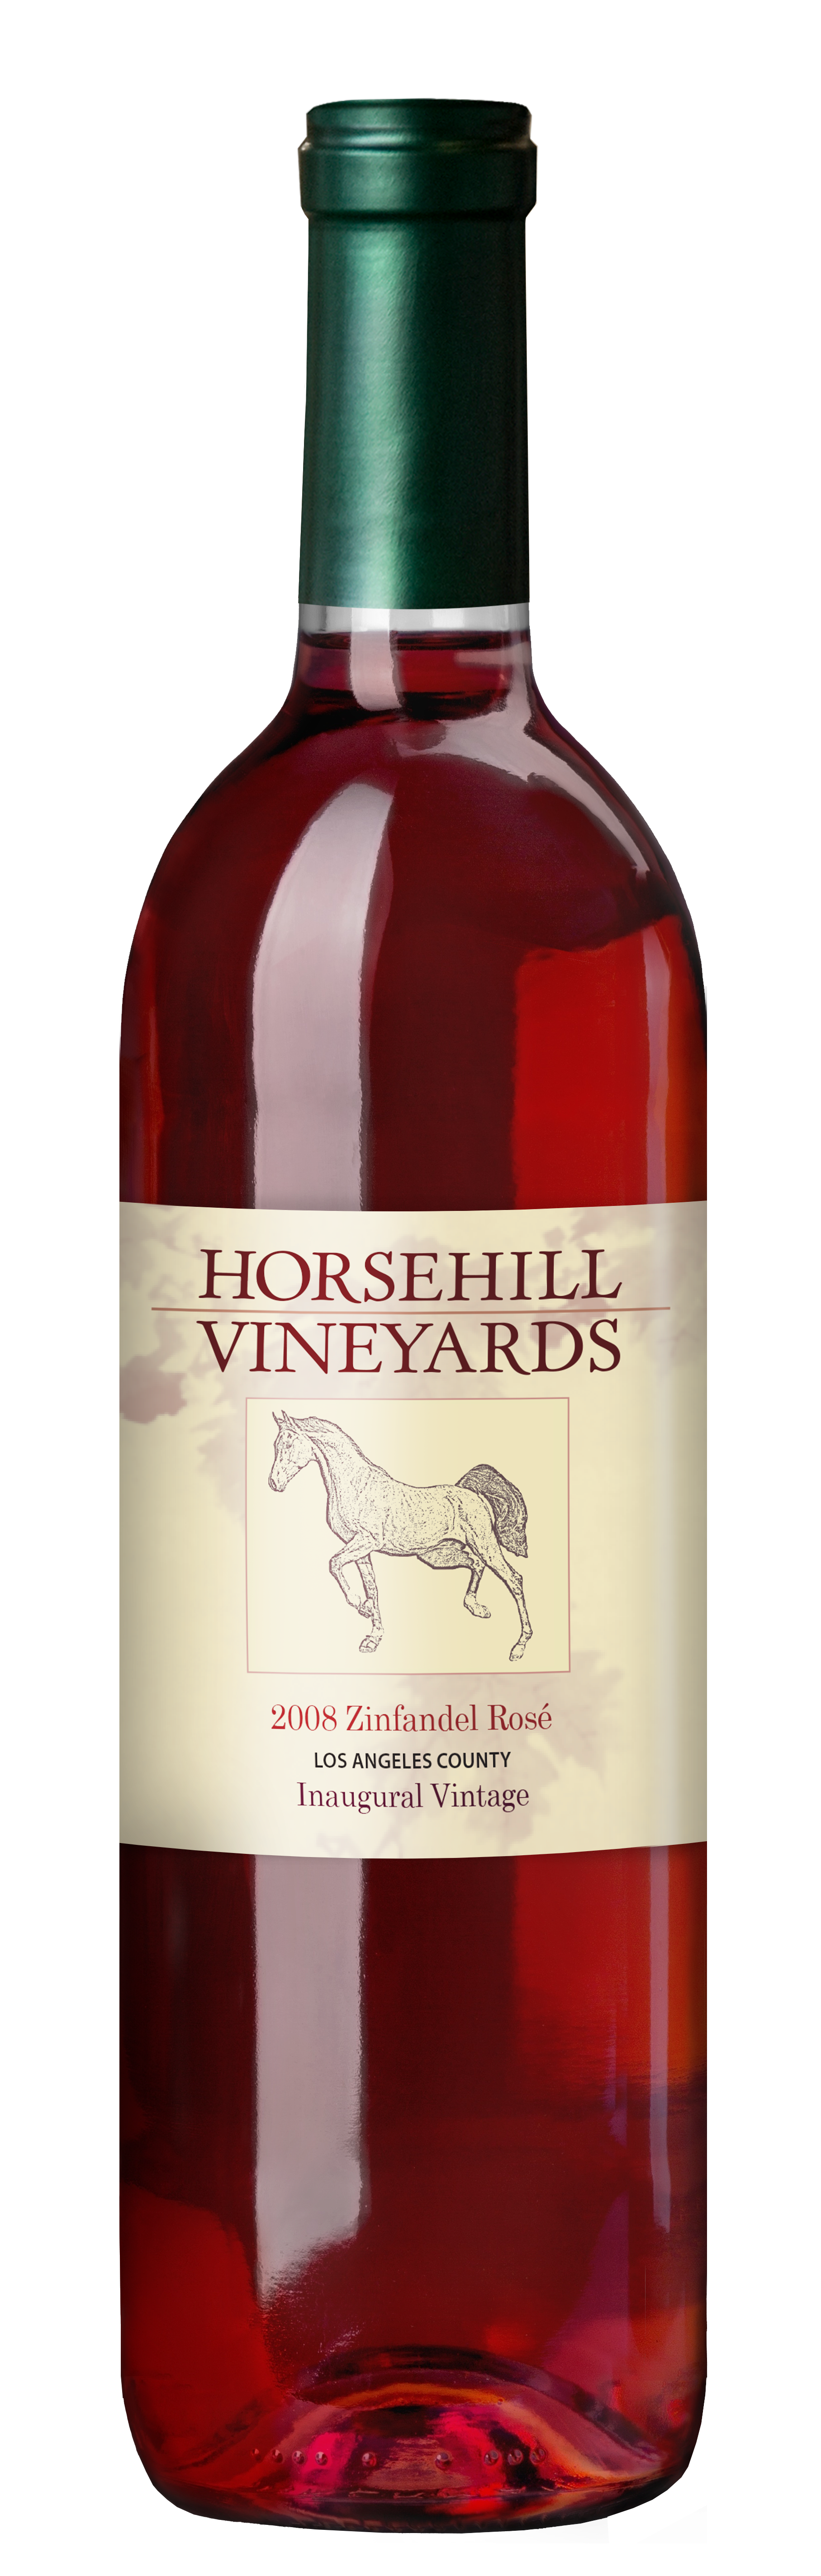 bottle of Horsehill Vineyards 2008 Zinfandel Rose